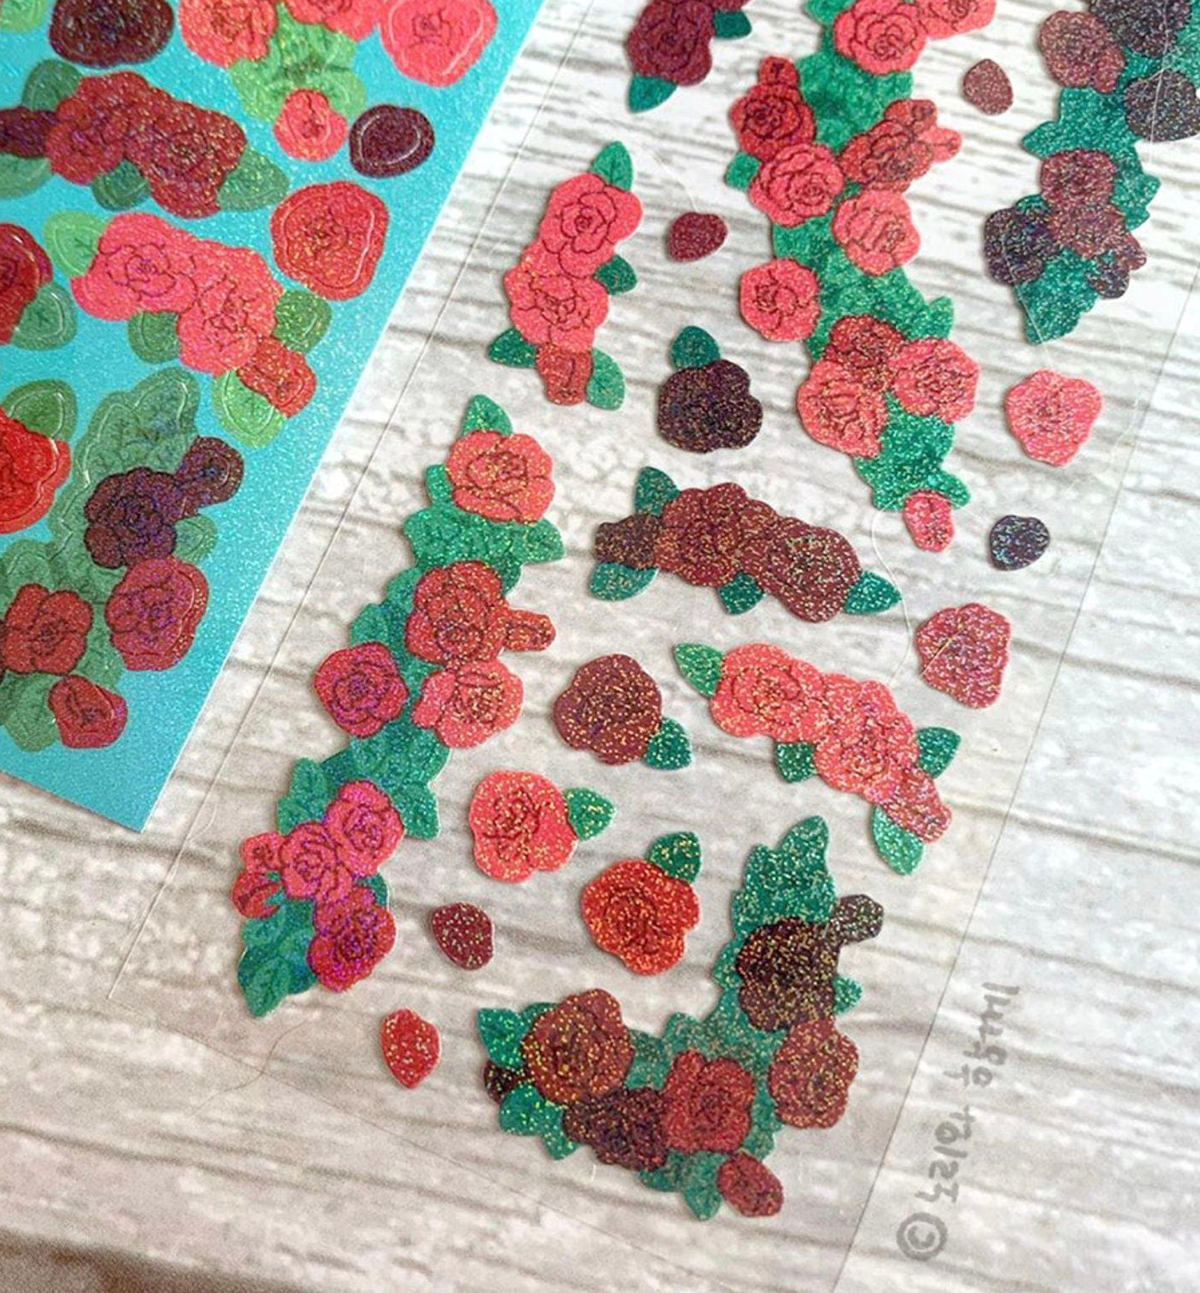 Rose Confetti Seal Sticker [Deep Red]